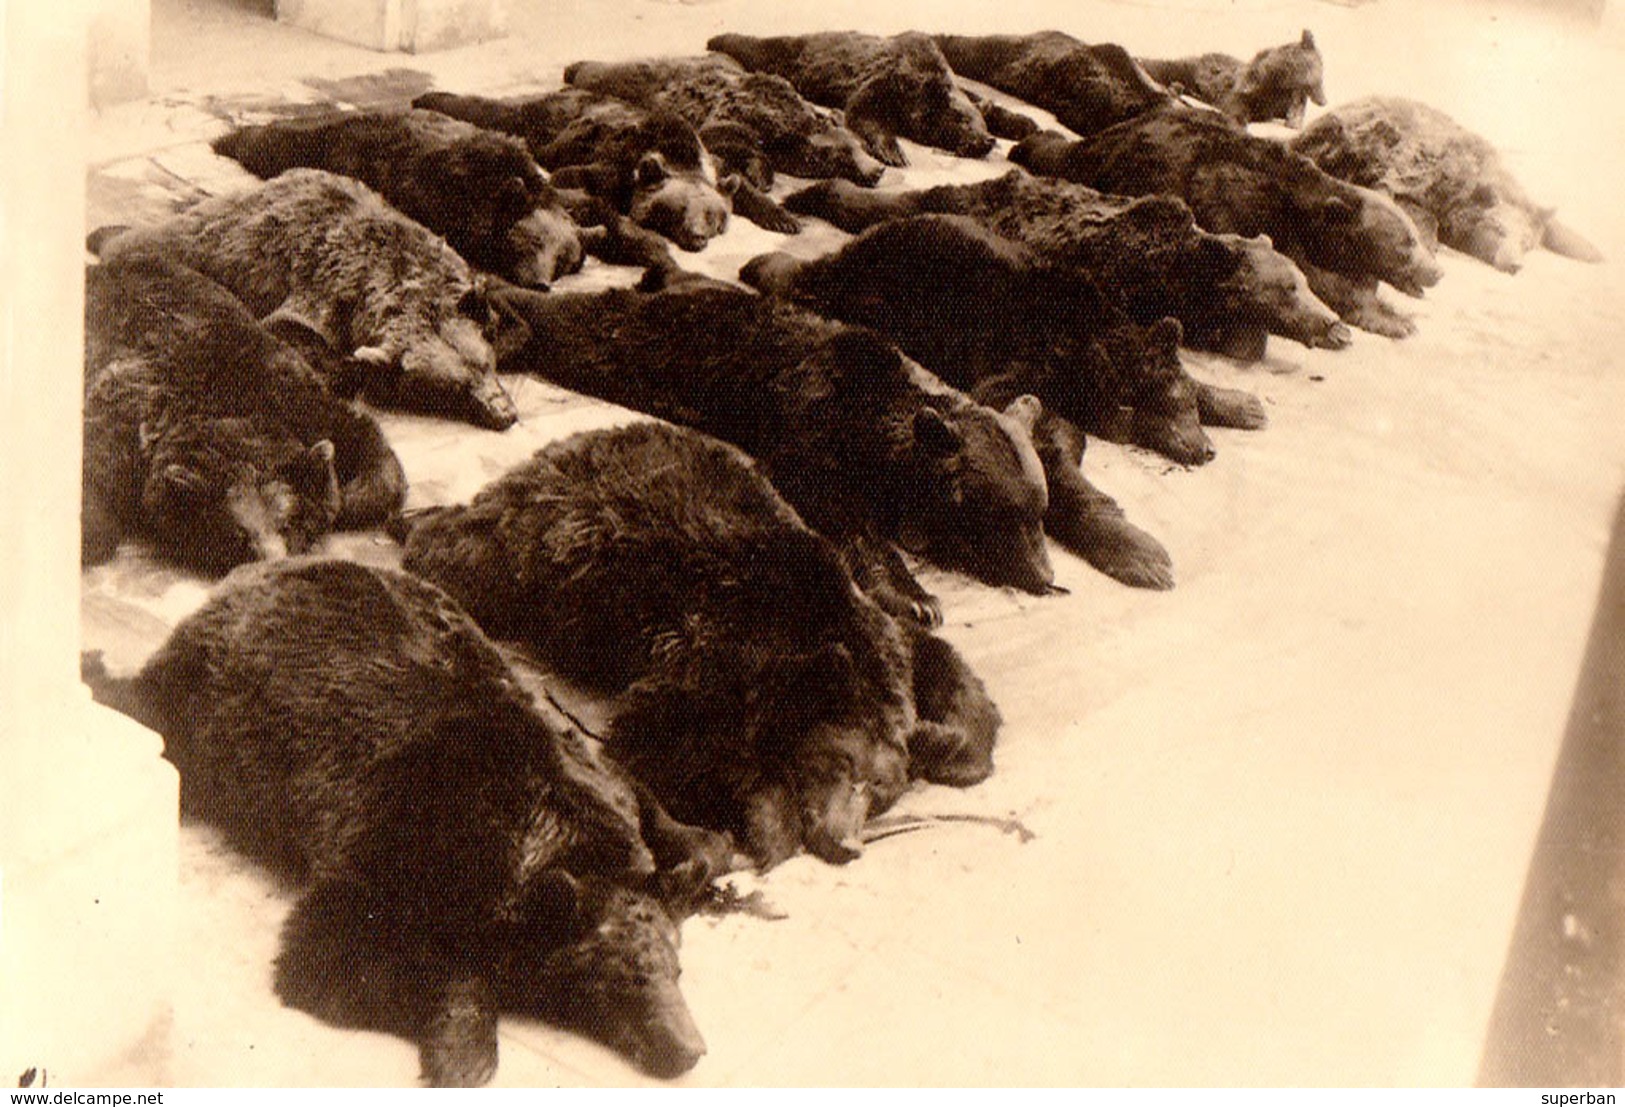 ROMANIA - BORSEC : CHASSE à L'OURS / BEAR HUNTING : 15 BEARS KILLED !!! - CARTE VRAIE PHOTO / REAL PHOTO - 1930 (aa916) - Caccia